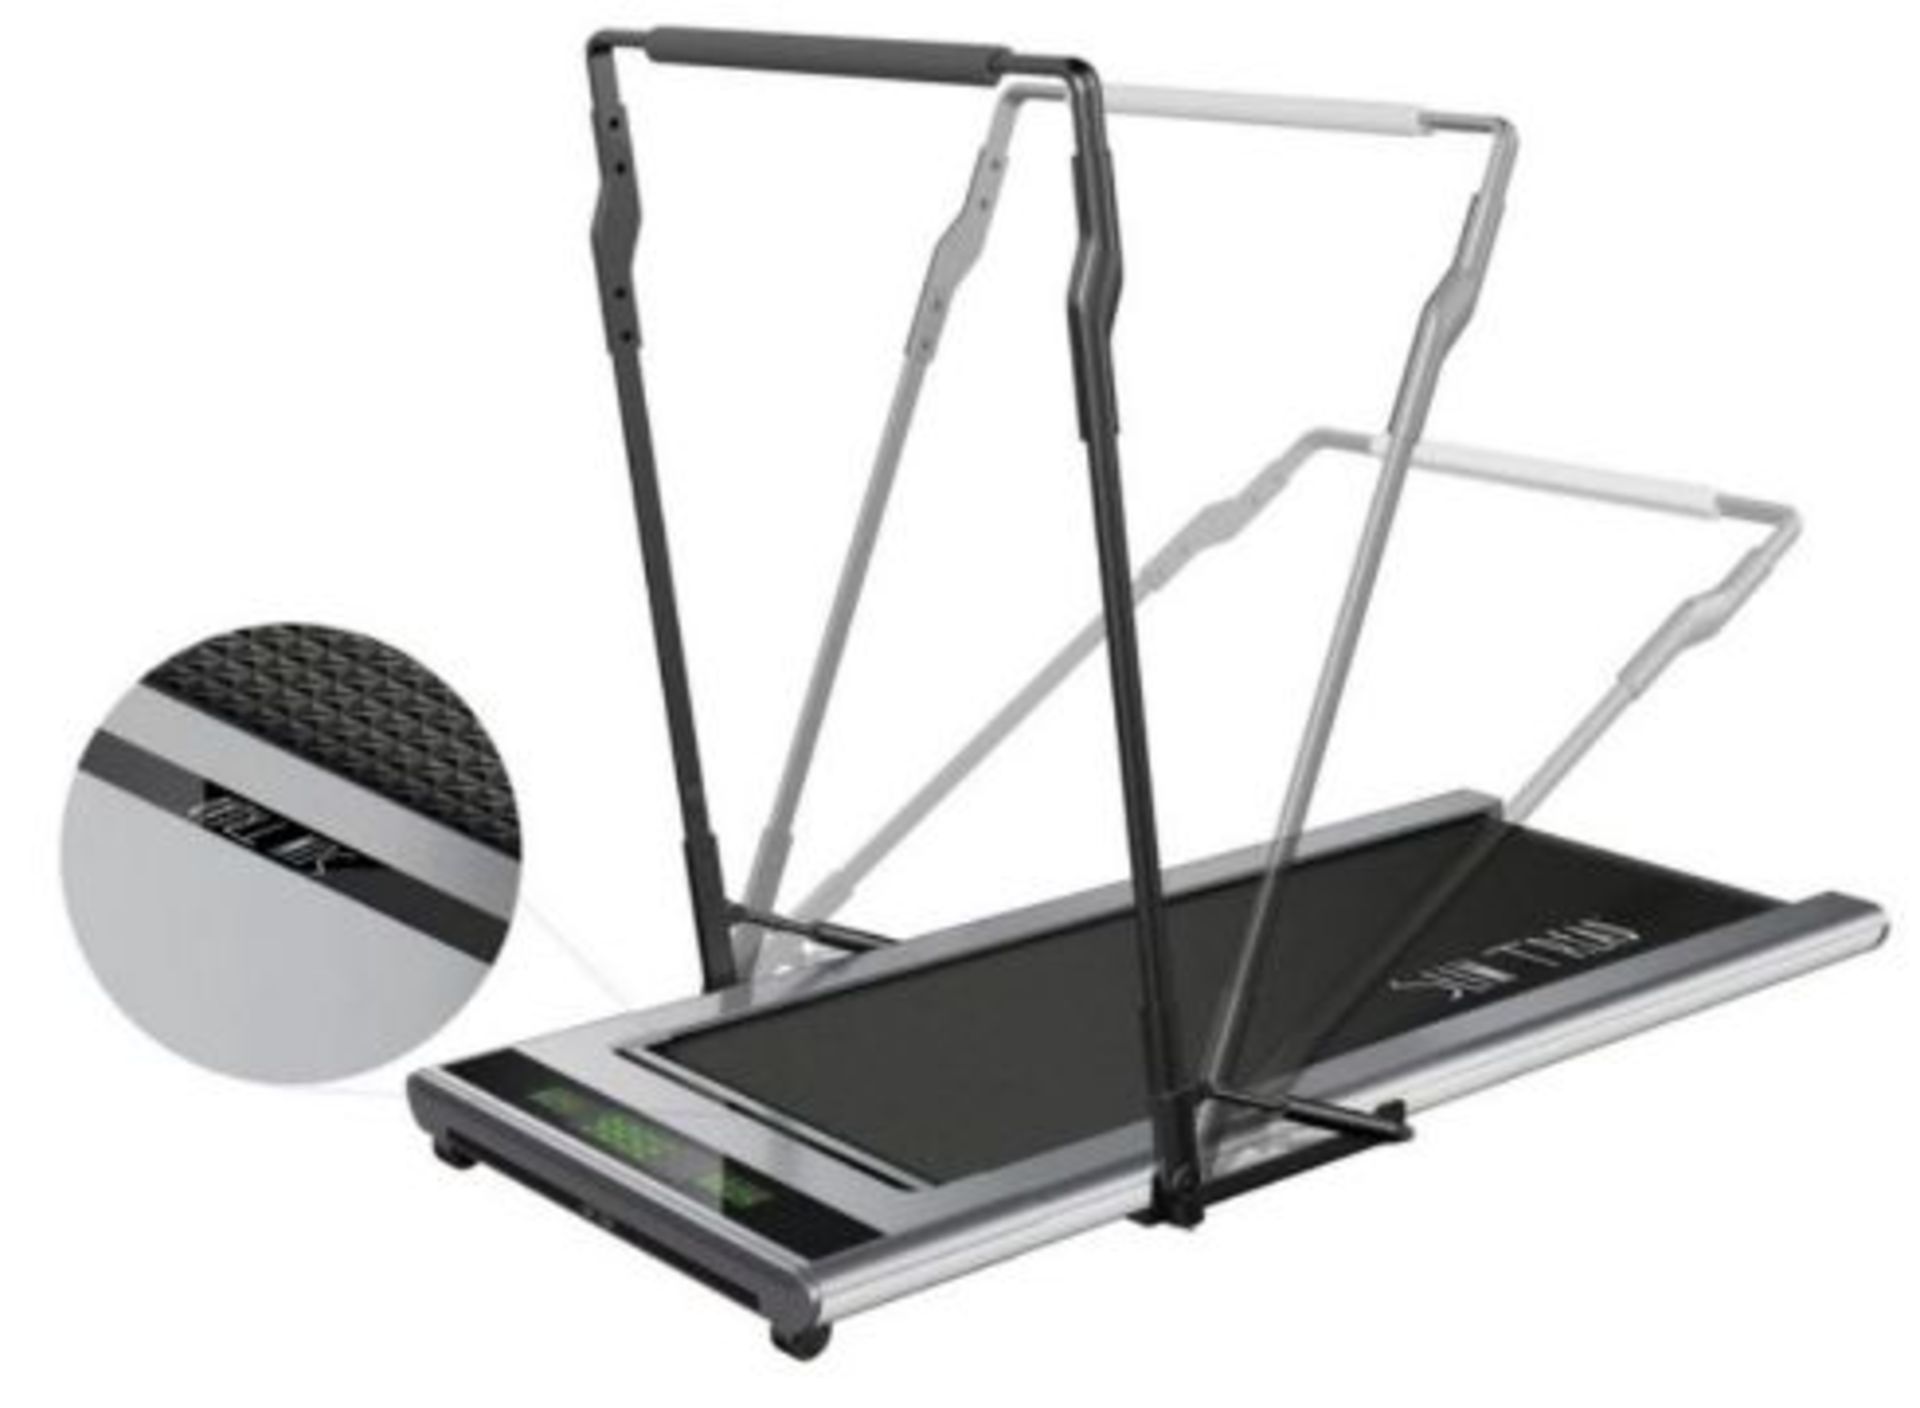 1 x Slim Tread Ultra Thin Smart Treadmill Running / Walking Machine - Lightweight With Folding - Image 2 of 6